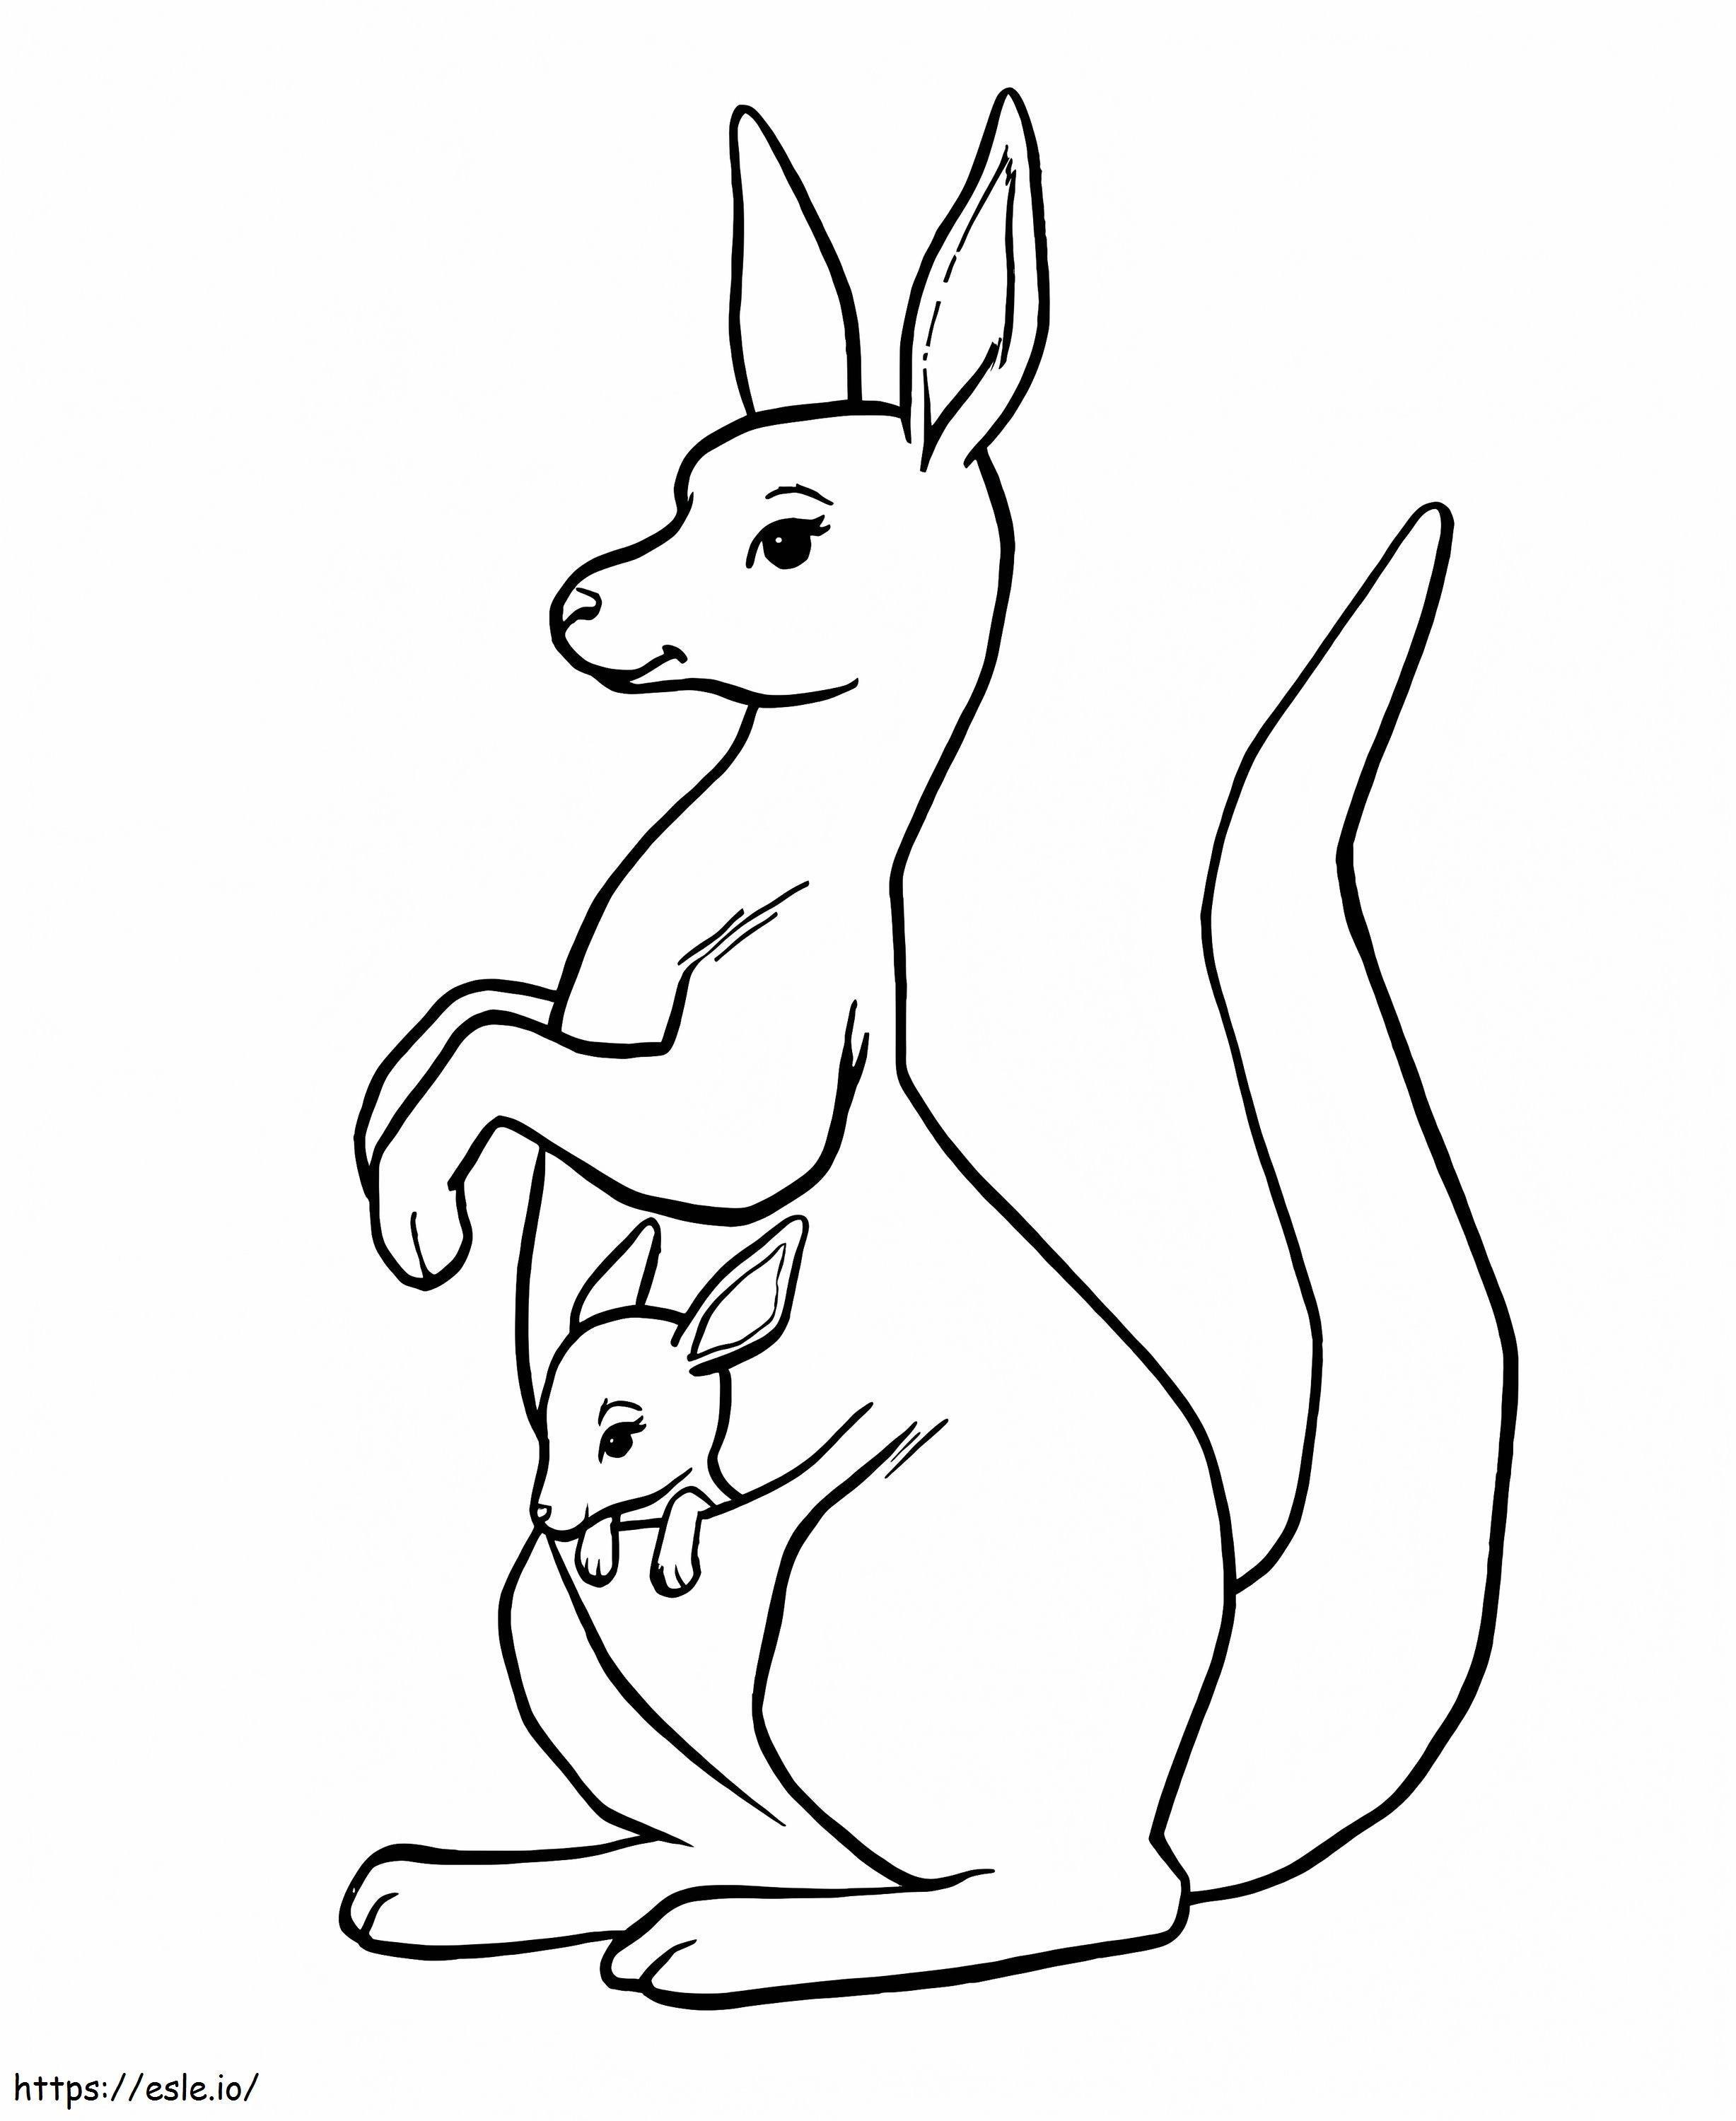 Big Mother And Baby Kangaroo coloring page